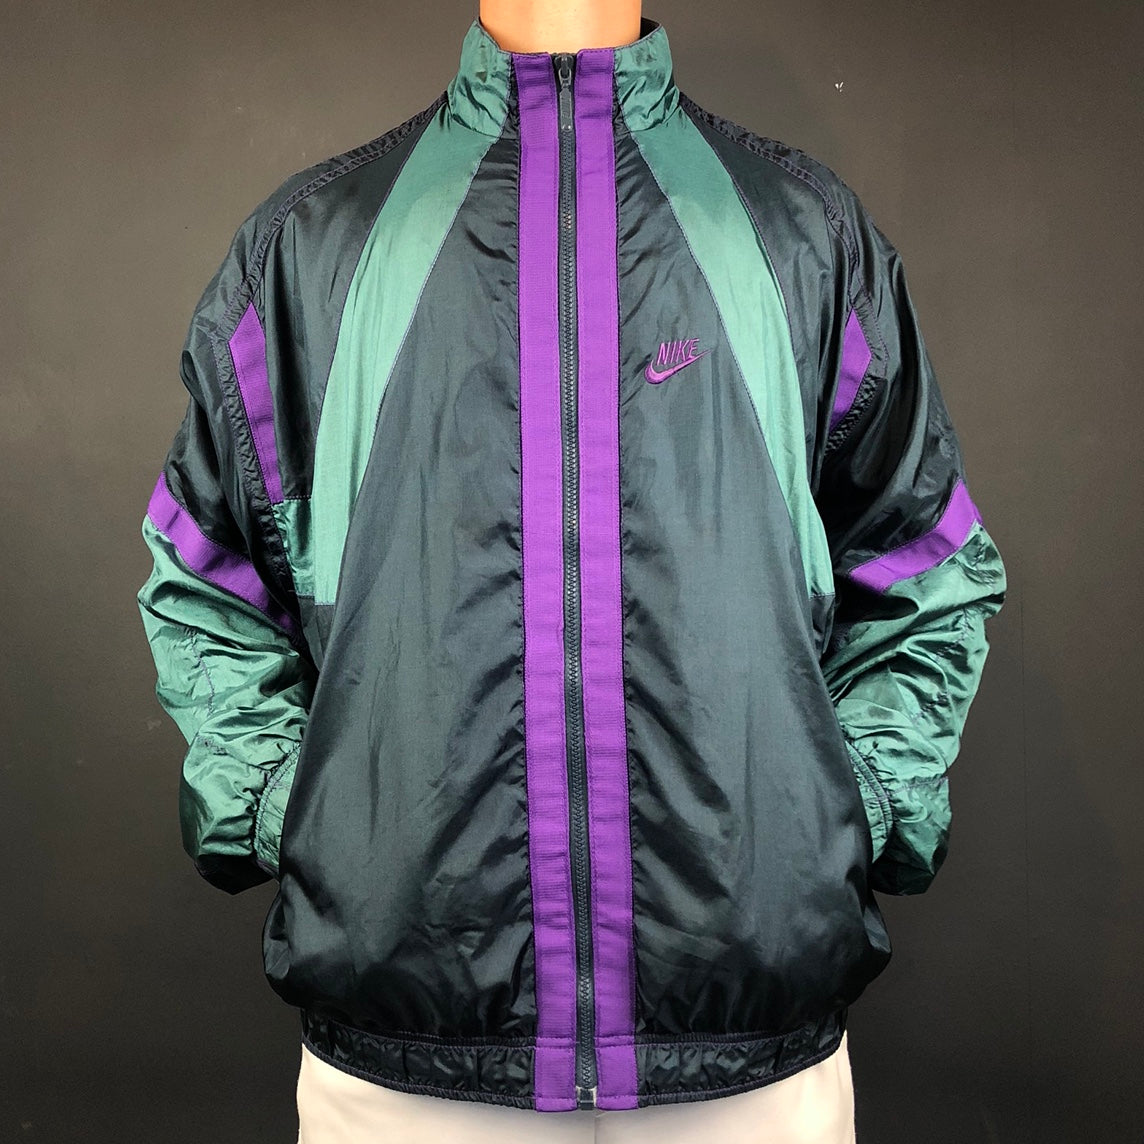 Vintage Windbreaker / Shell Jacket - Vintique Clothing